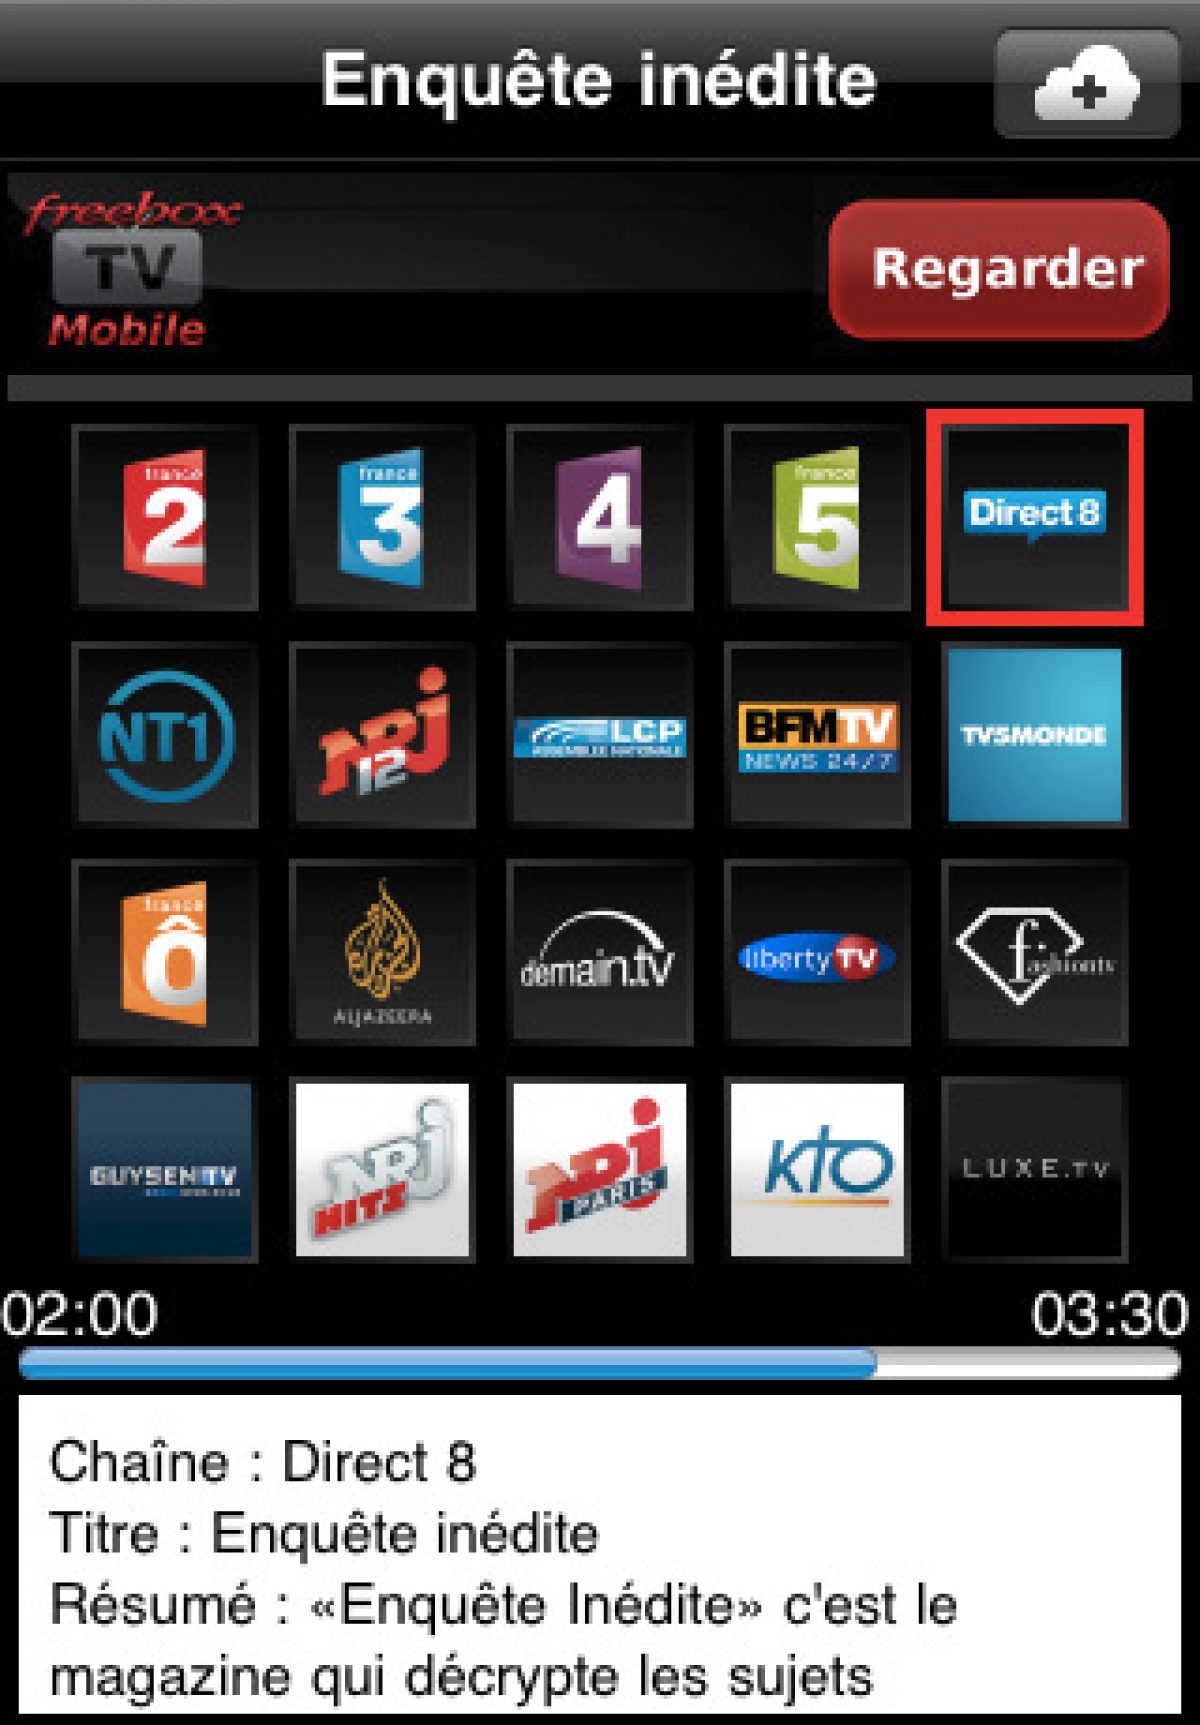 Freebox Tv Mobile (iPhone) mise à jour